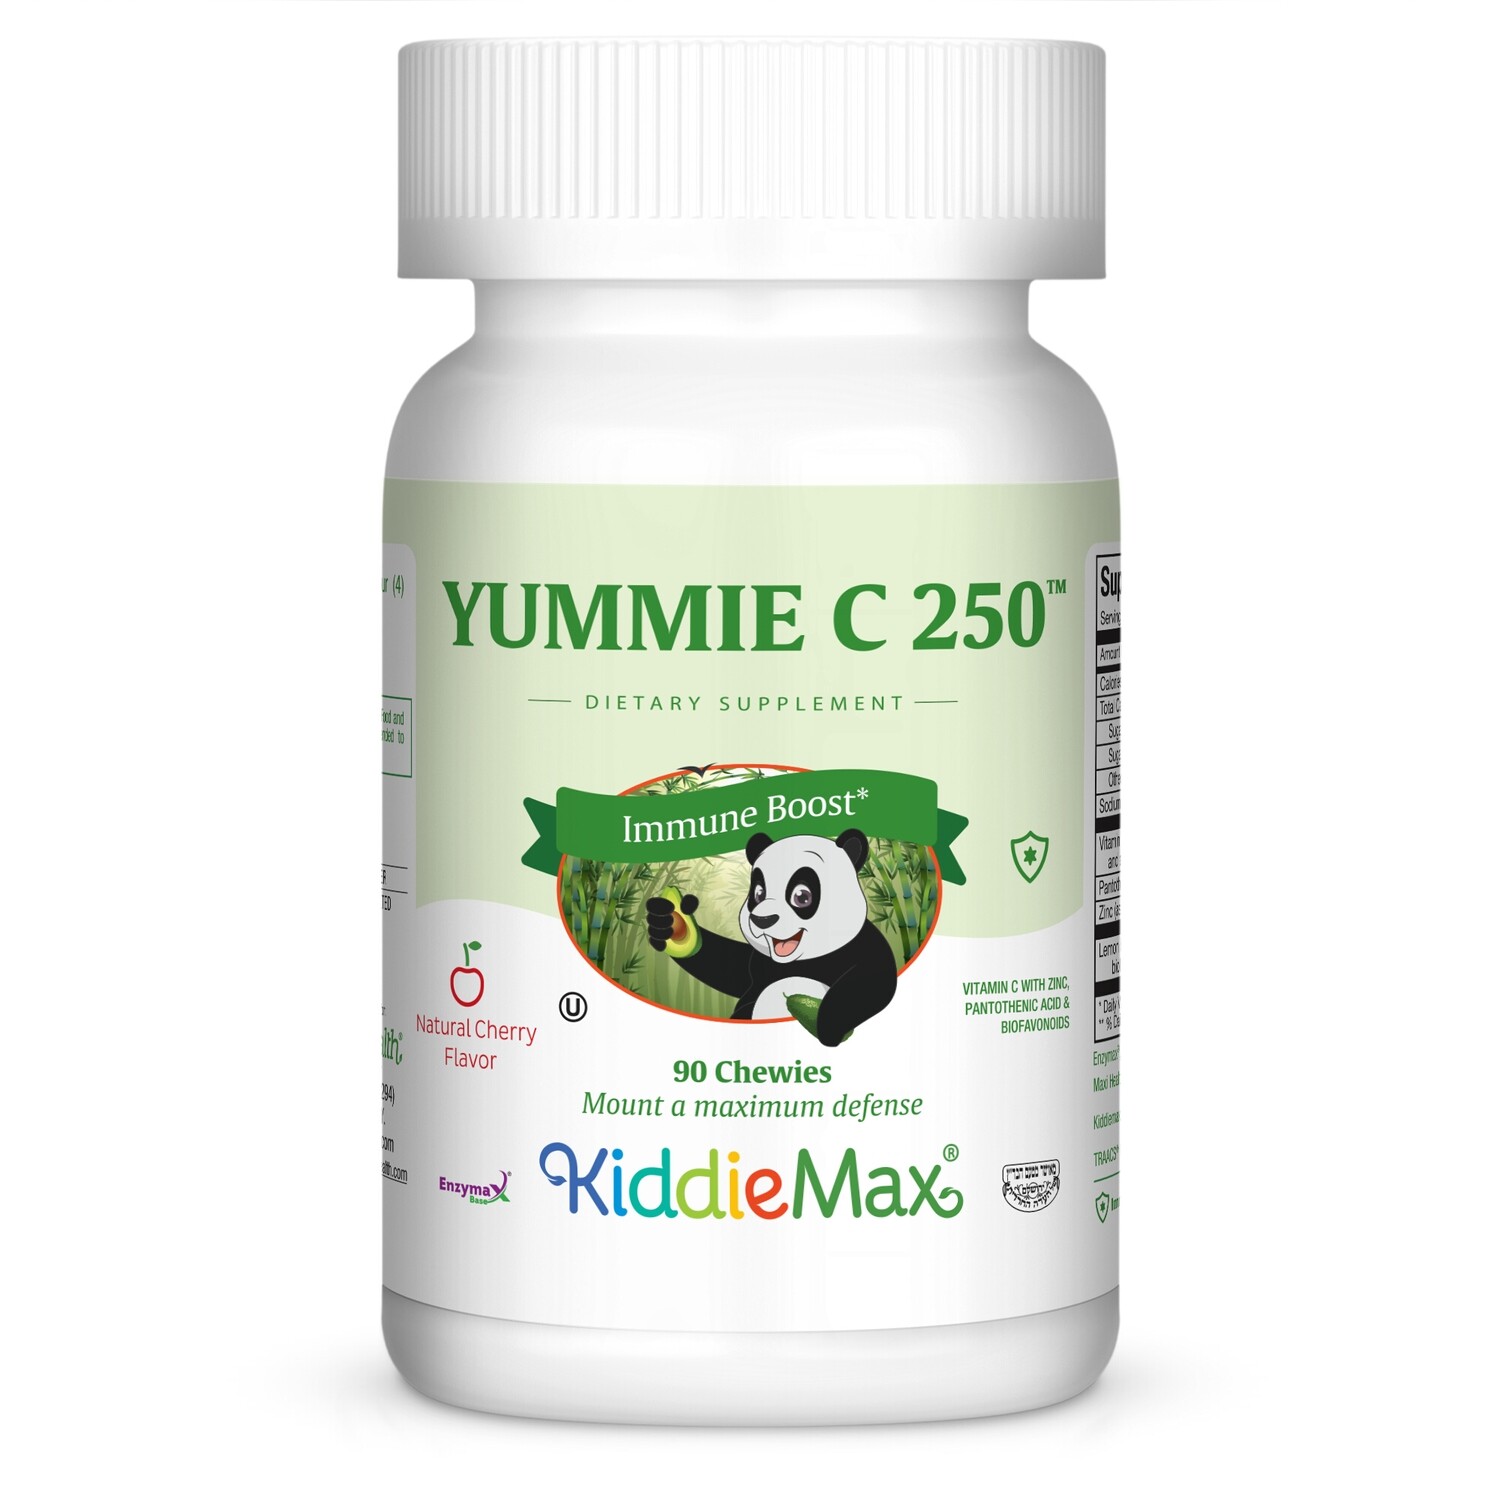 Maxi Health, Kosher KiddieMax, Yummie C 250, Cherry Flavor (Vitamin C Chewable) - 90 Chewies